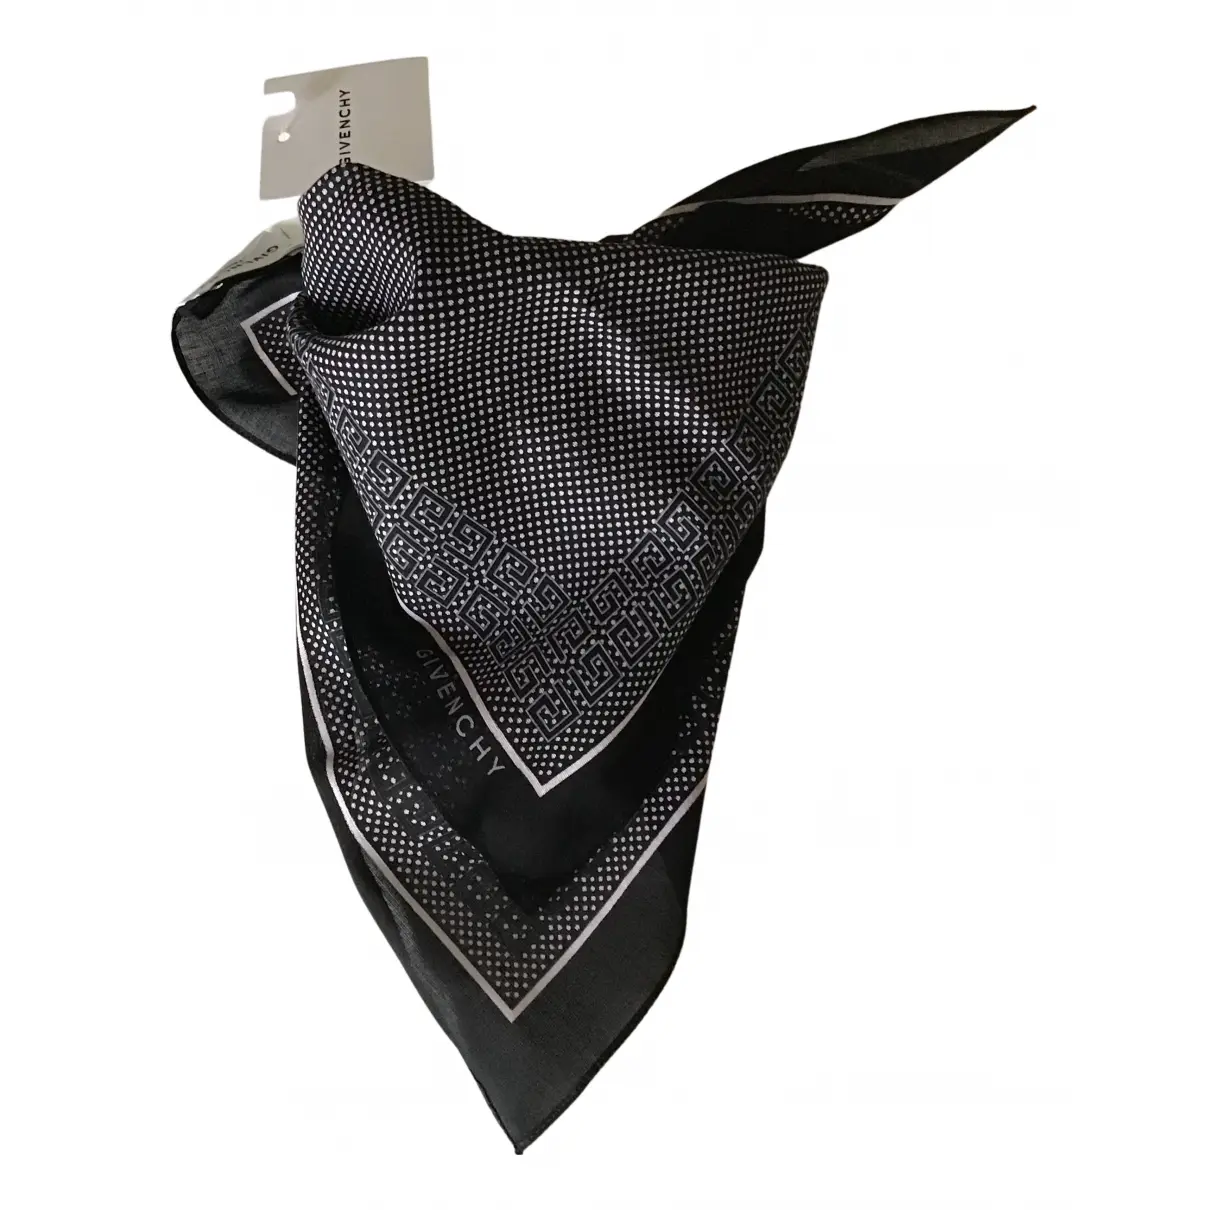 Silk handkerchief Givenchy